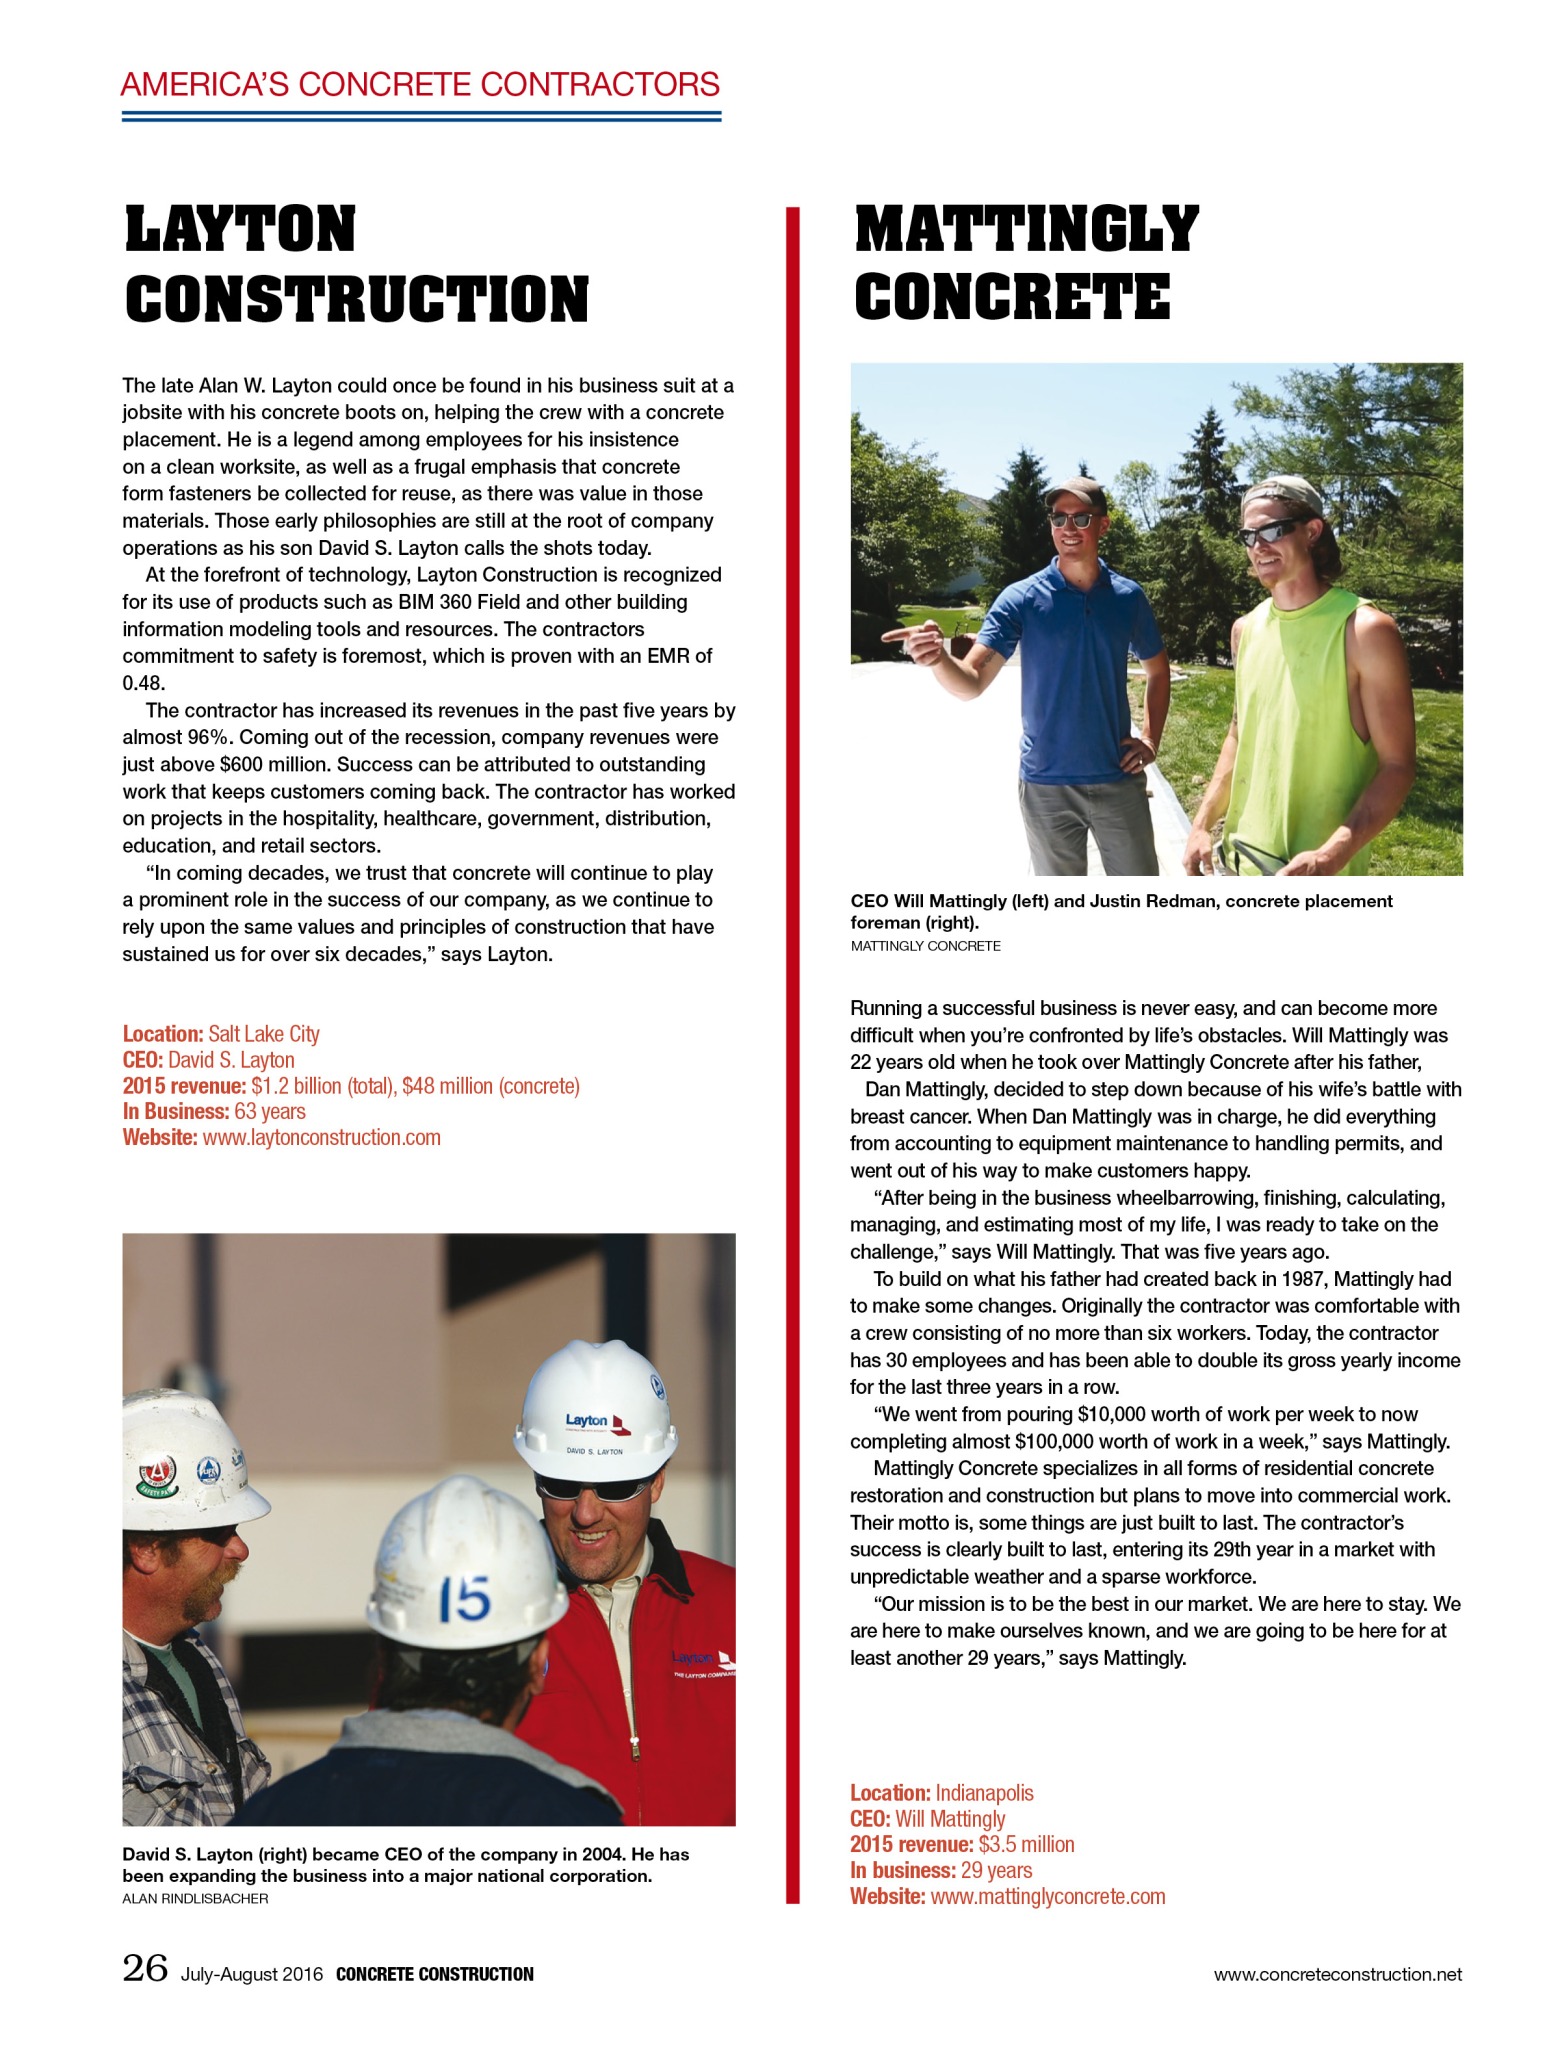 Concrete Construction Magazine: America’s Concrete Contractors – Ryan